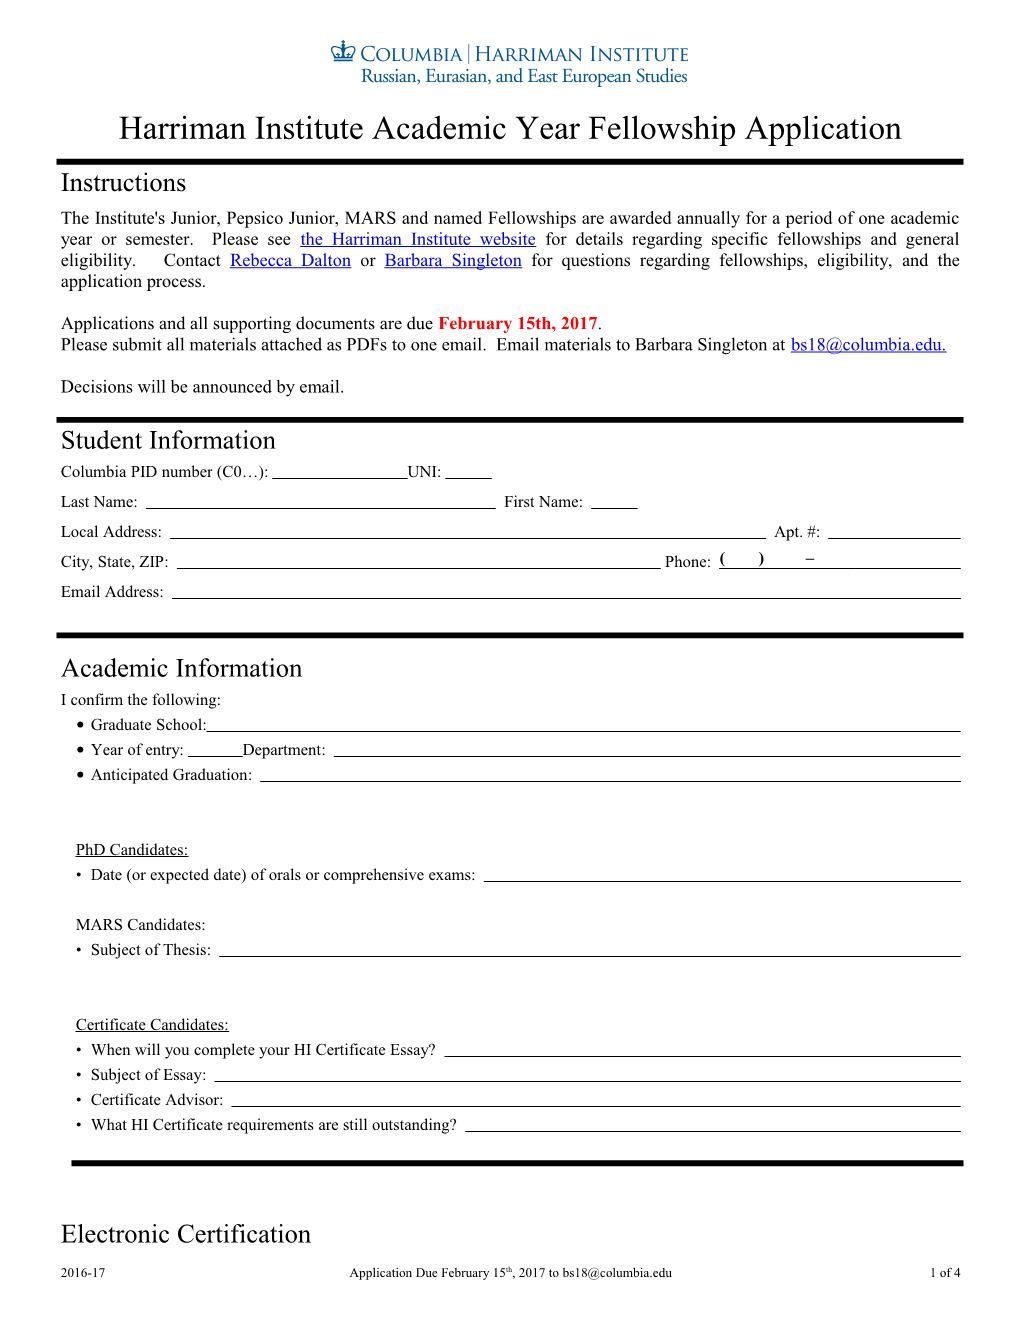 HI Junior Fellowship Application